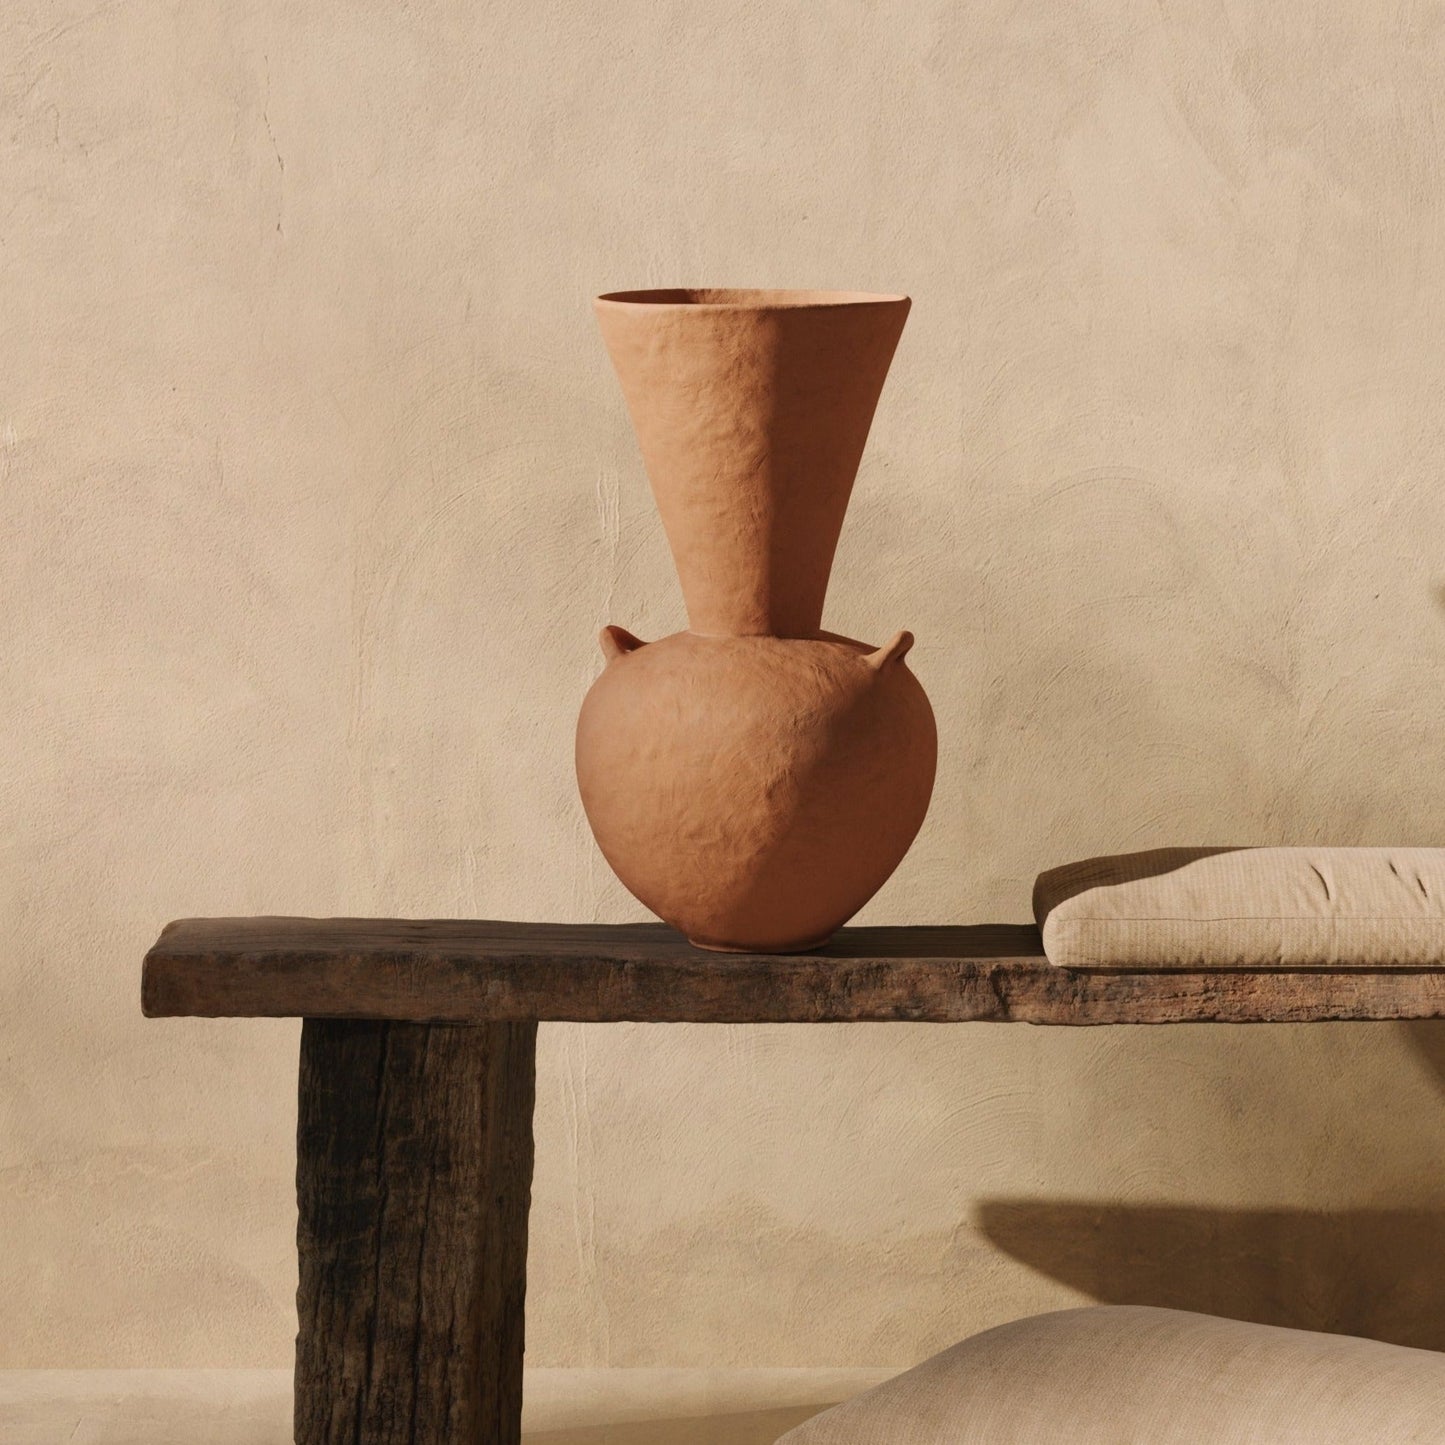 Marta Bonilla handmade ceramic terracotta vase available at Rook & Rose.